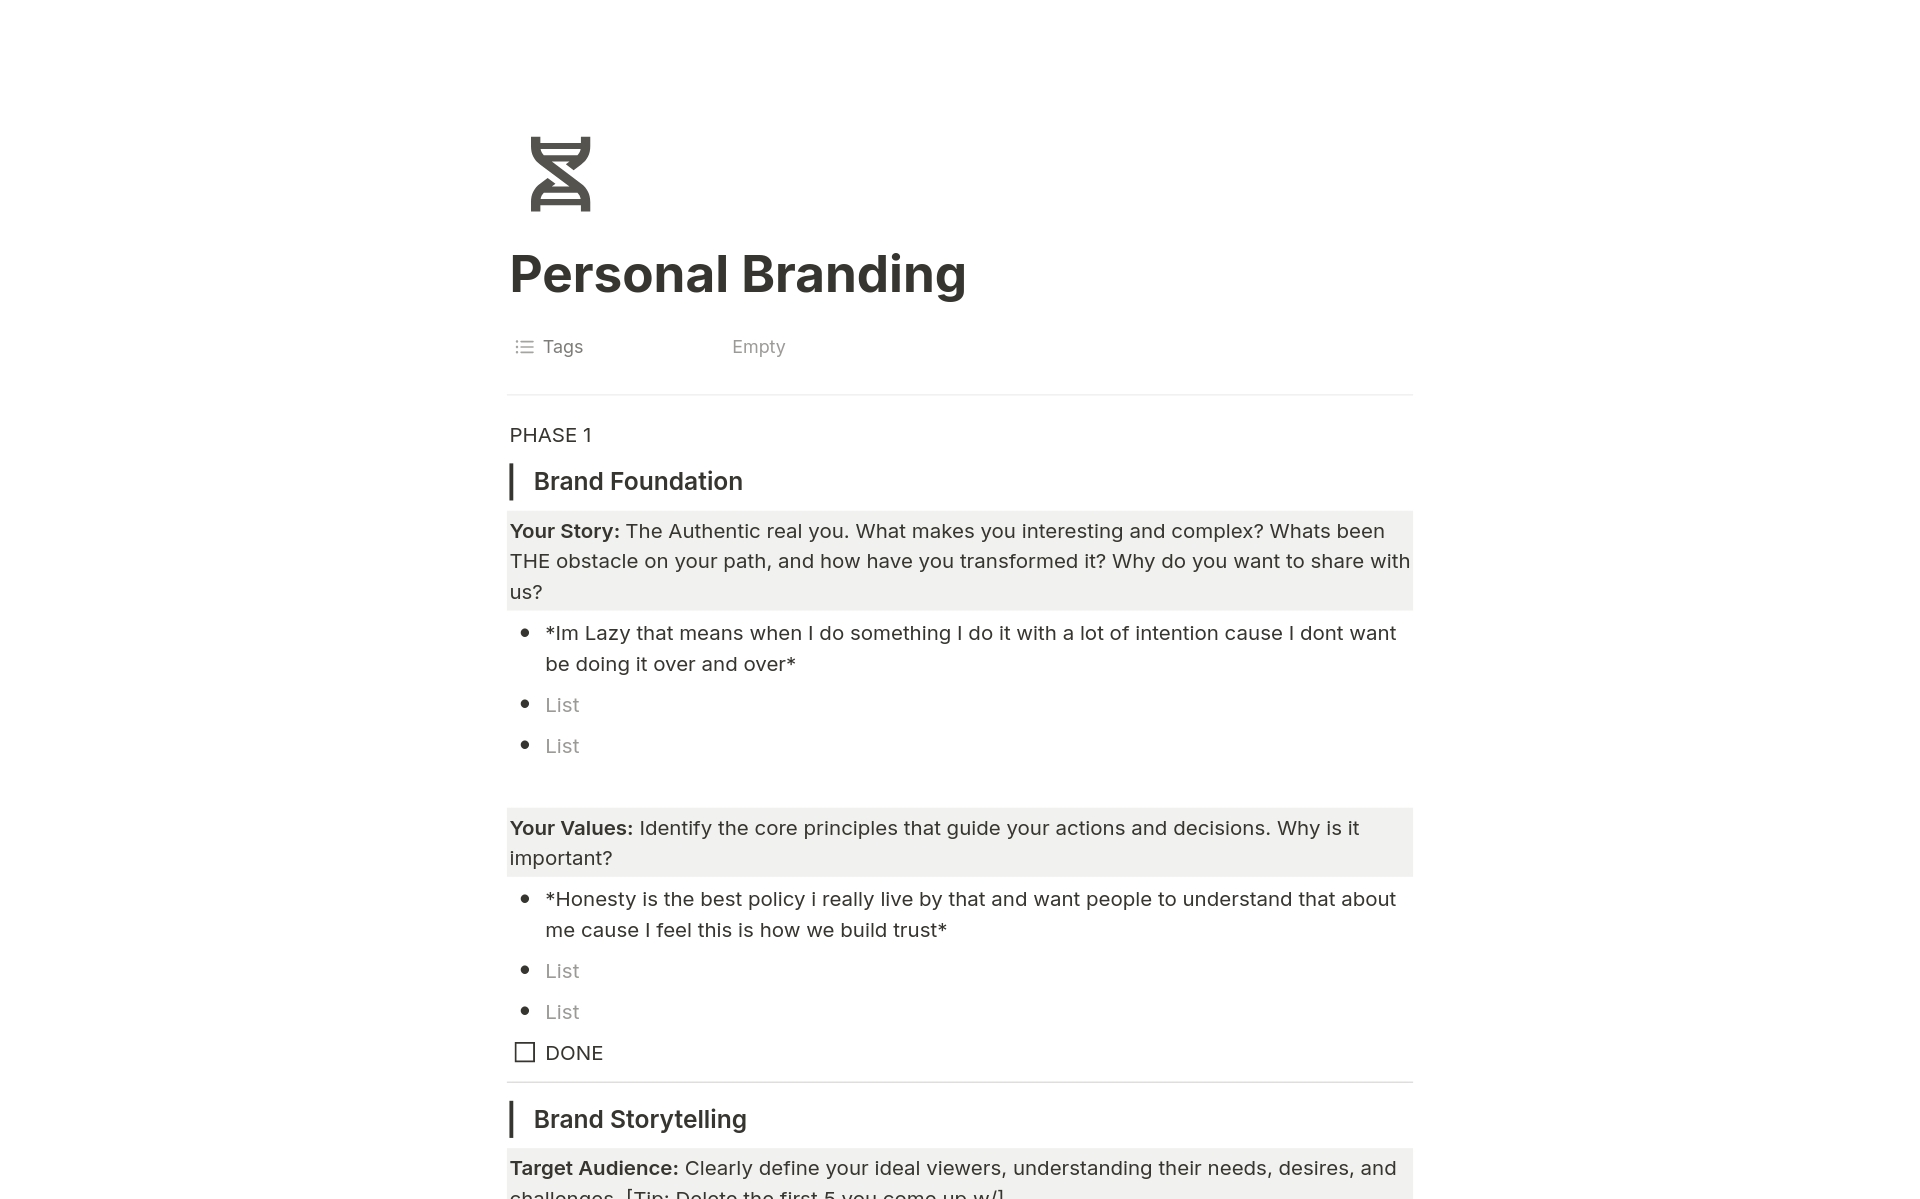 Vista previa de plantilla para Personal Branding